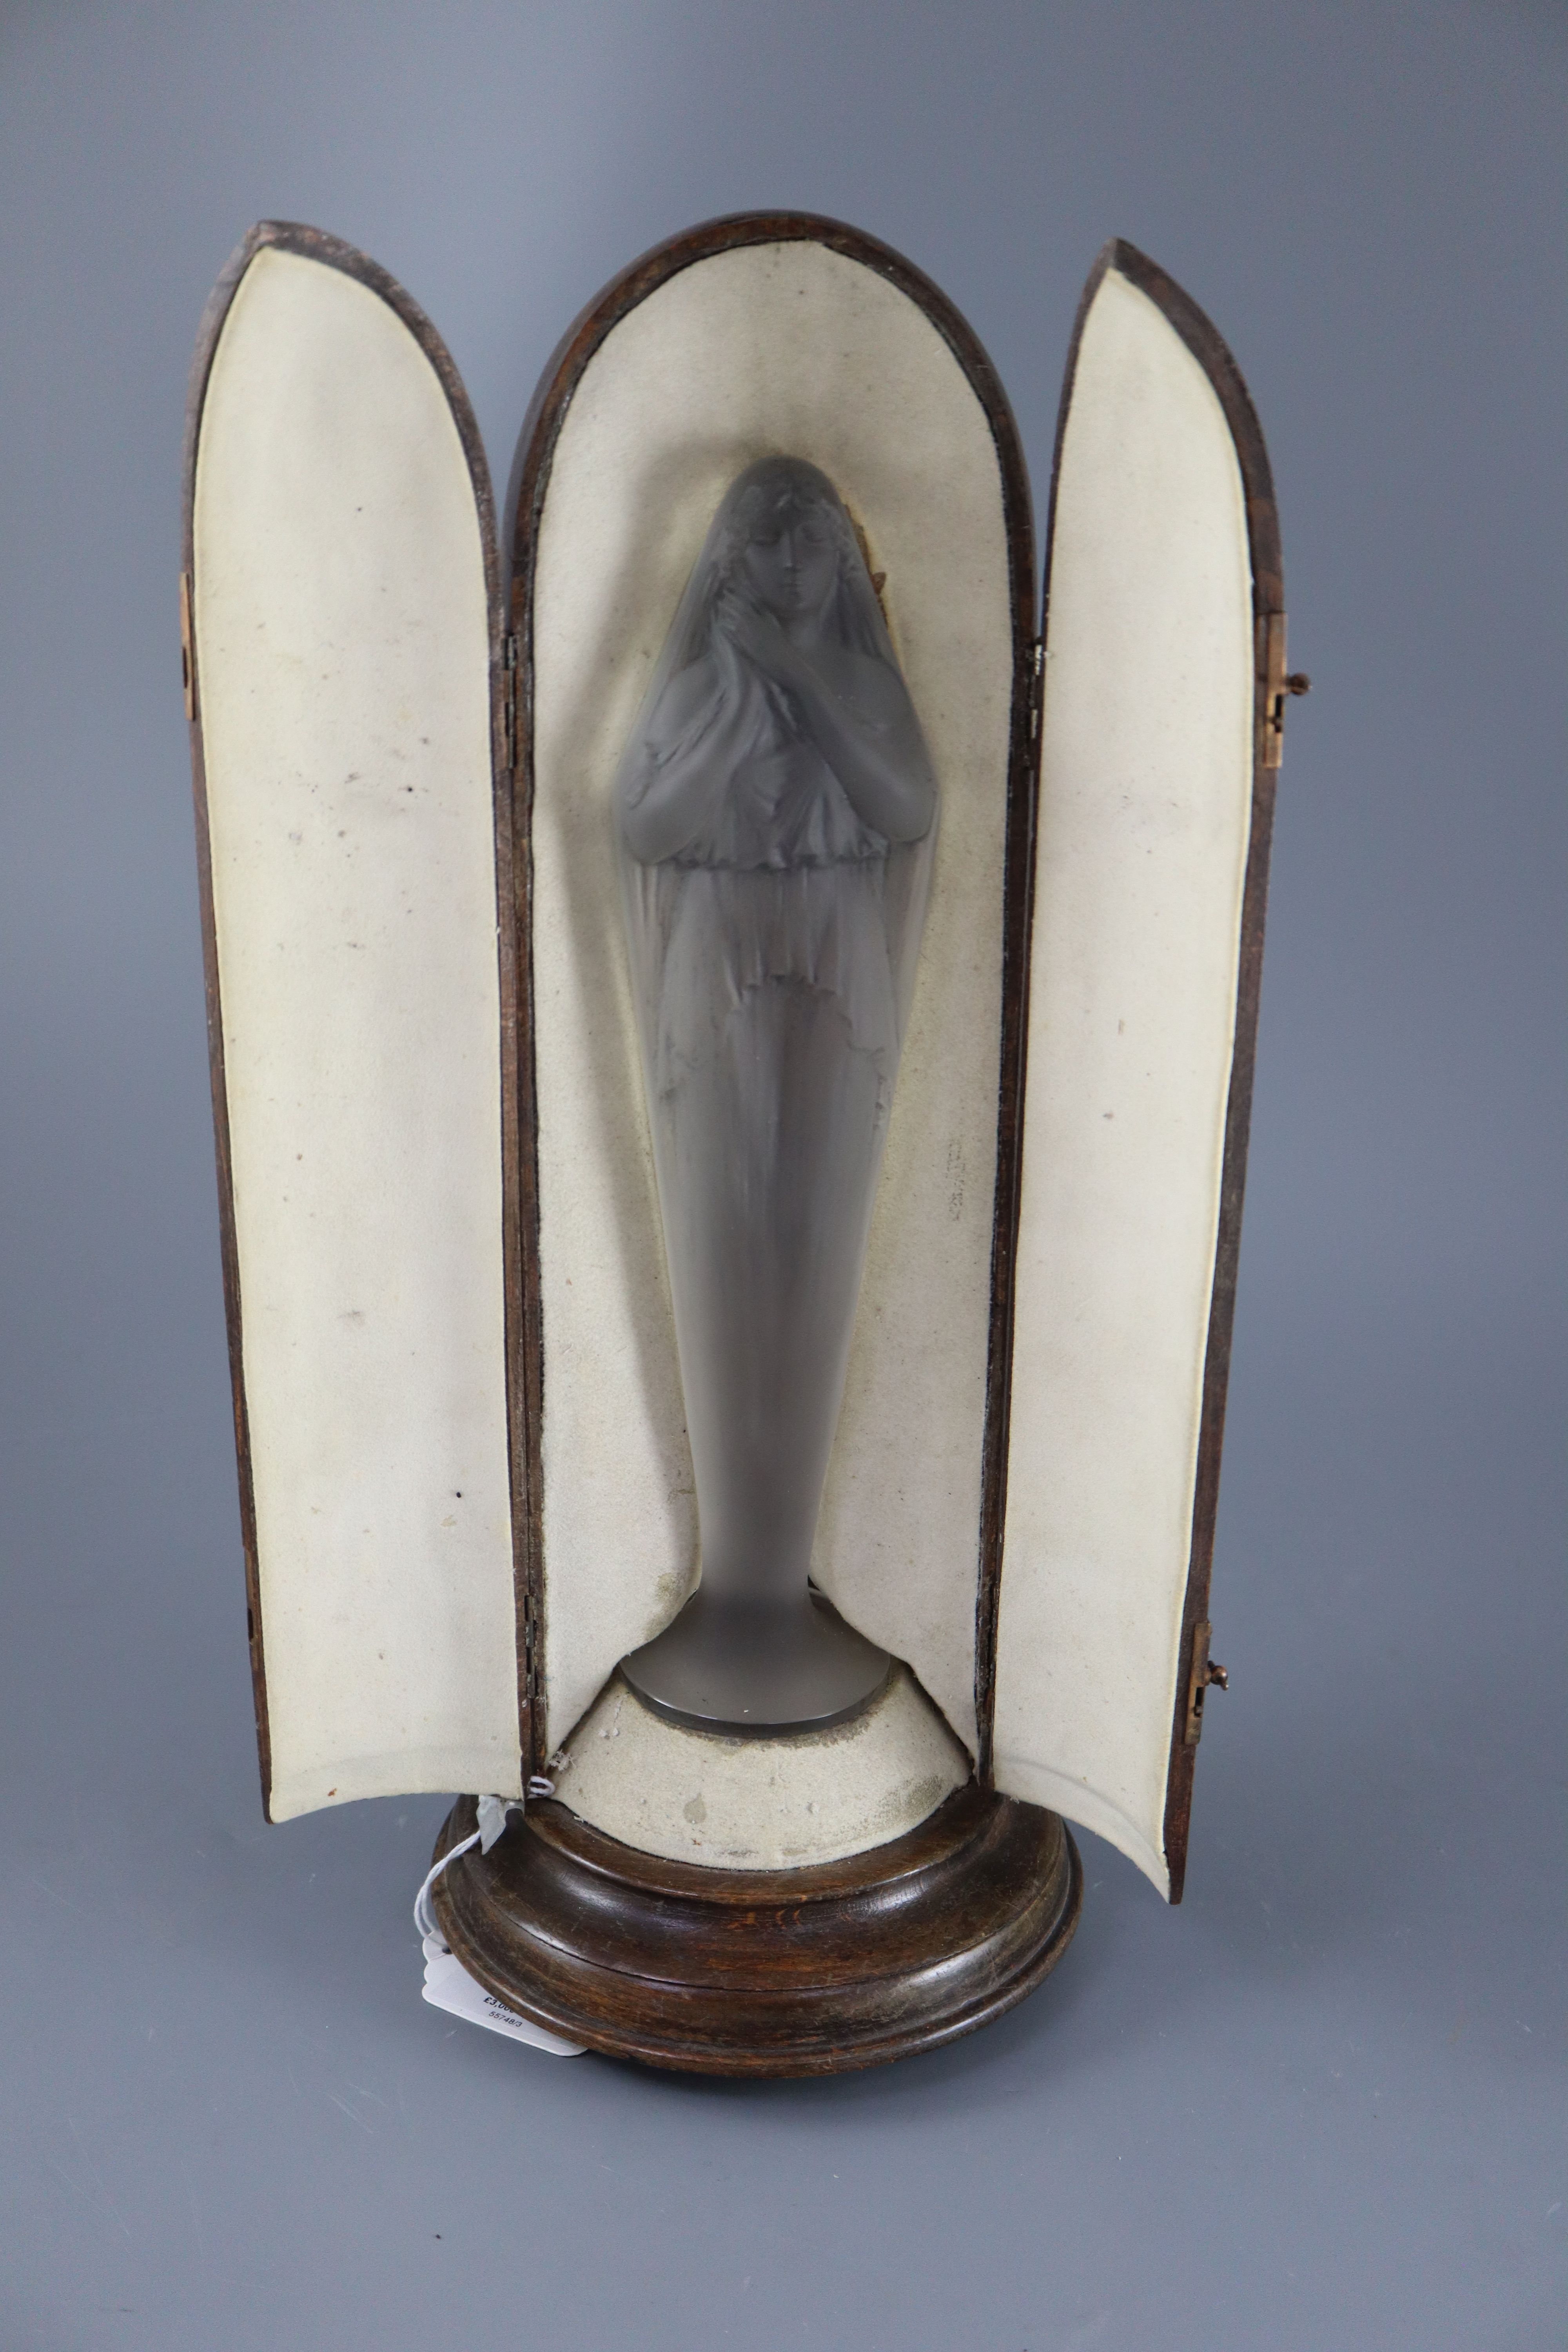 René Lalique. A pre-war statuette - Voilee Mains Jointes, no.828, designed 1919, in original torpedo shaped case, statuette 27.5cm high